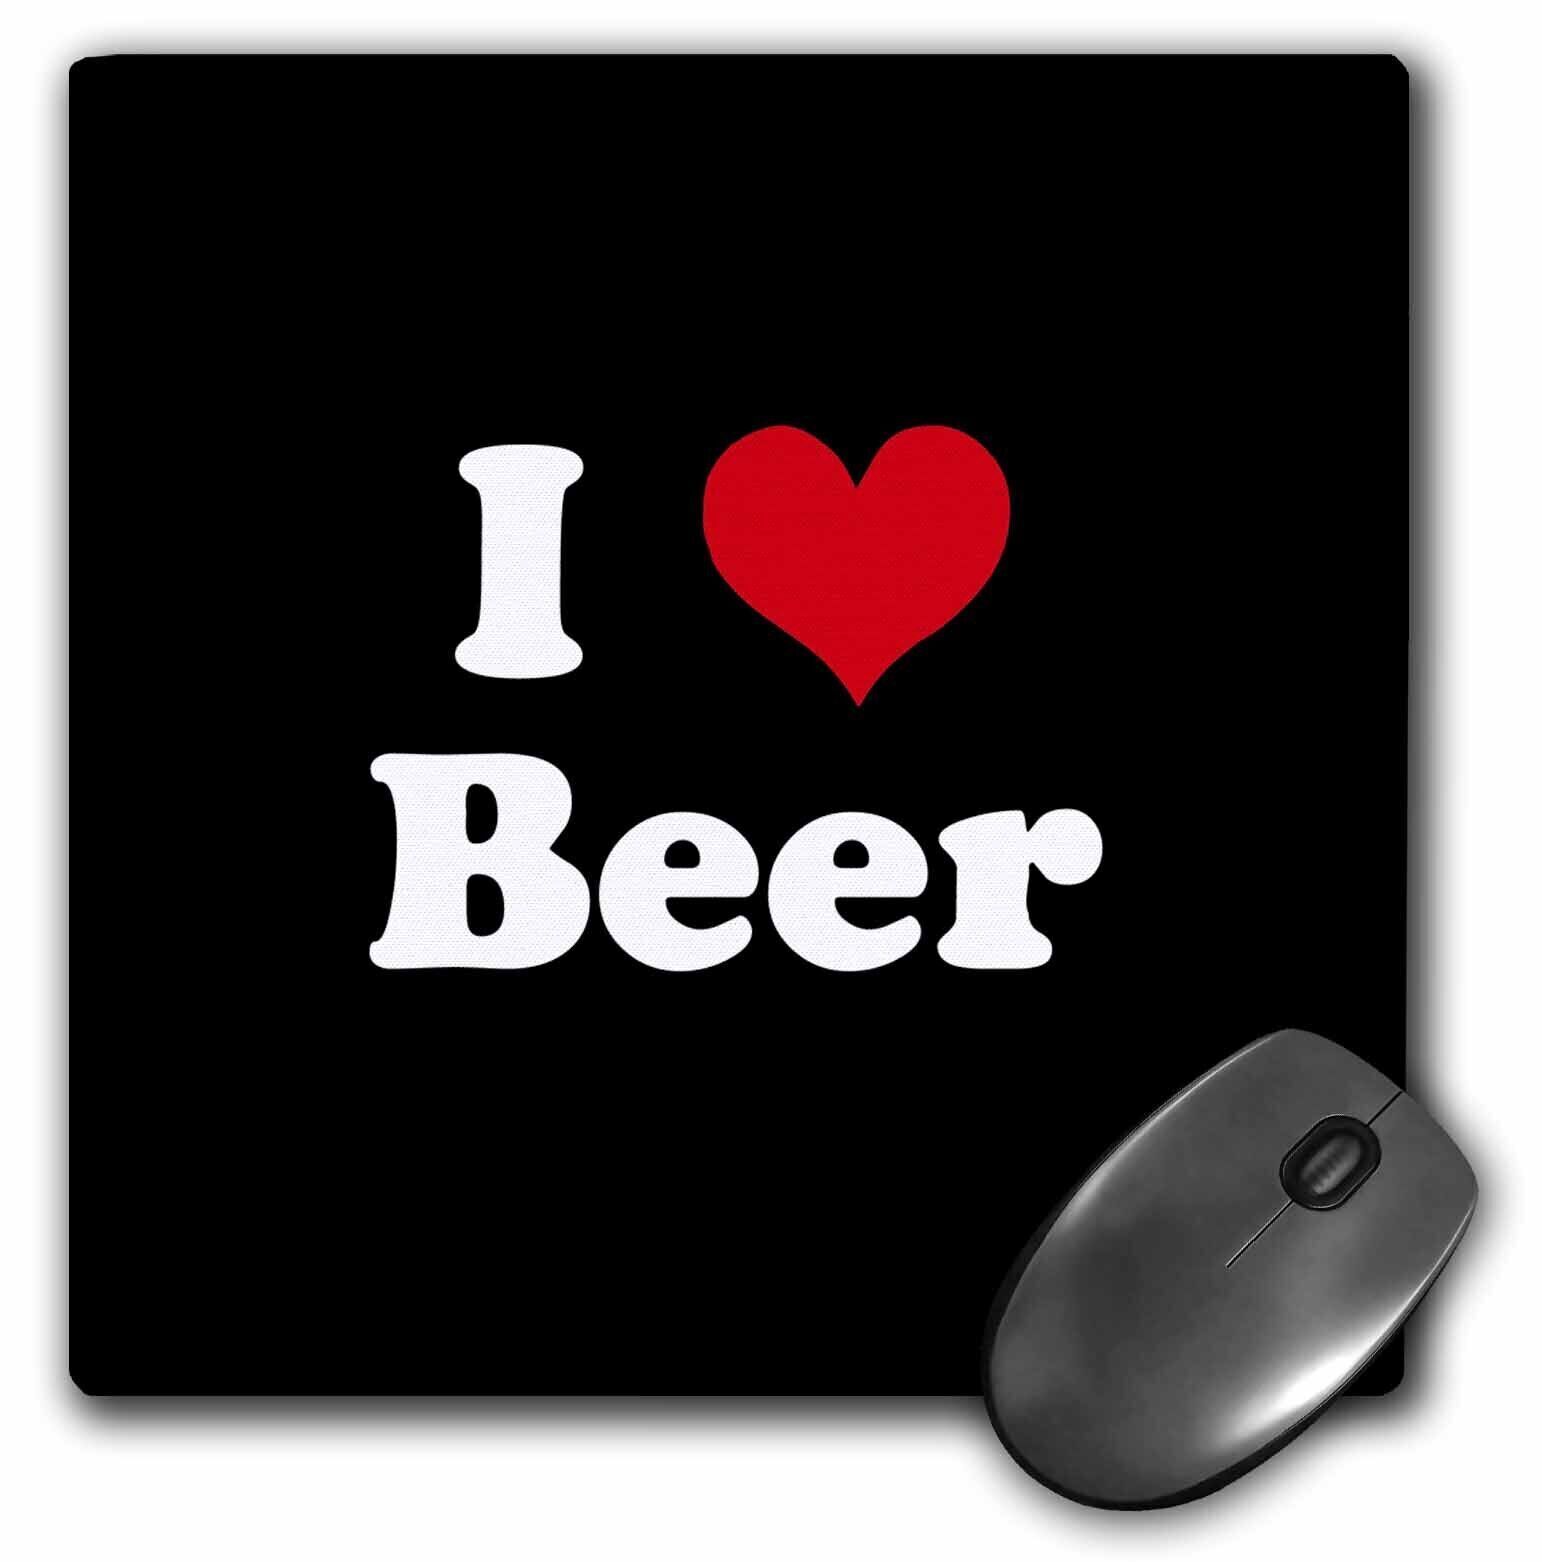 3dRose I Love Beer MousePad